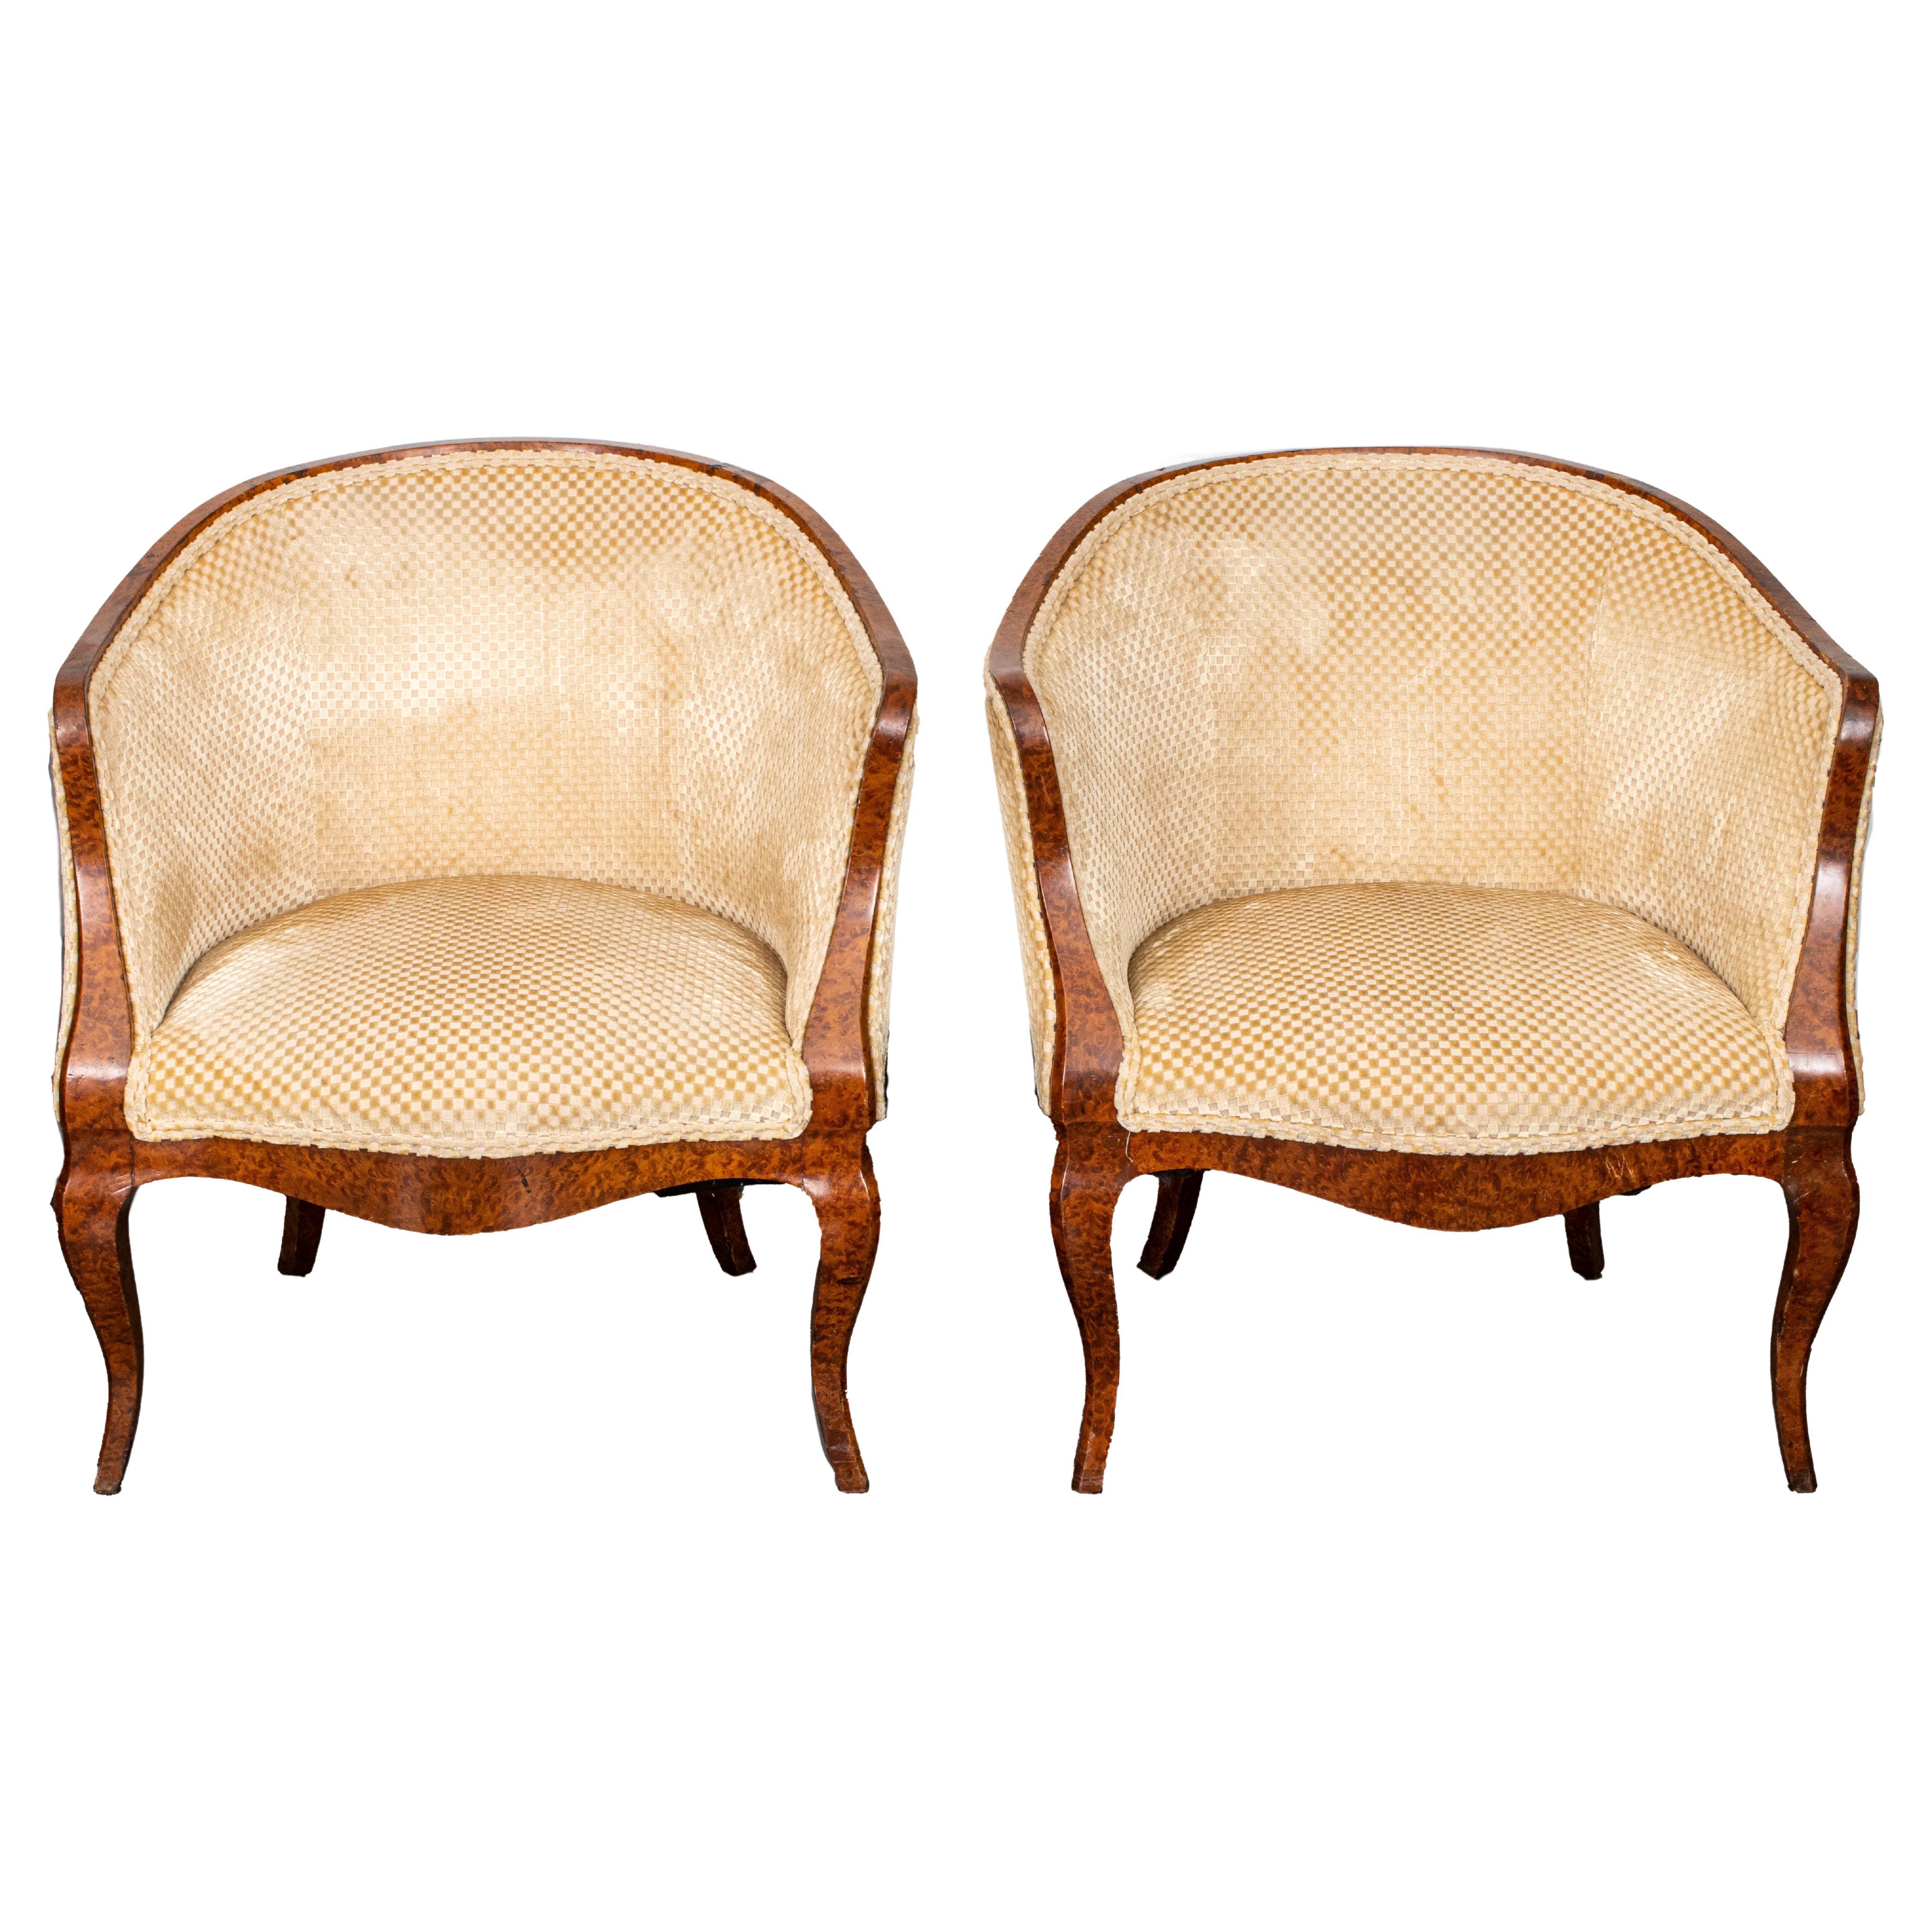 Pair of French Burl Wood Veneer Lounge Chairs